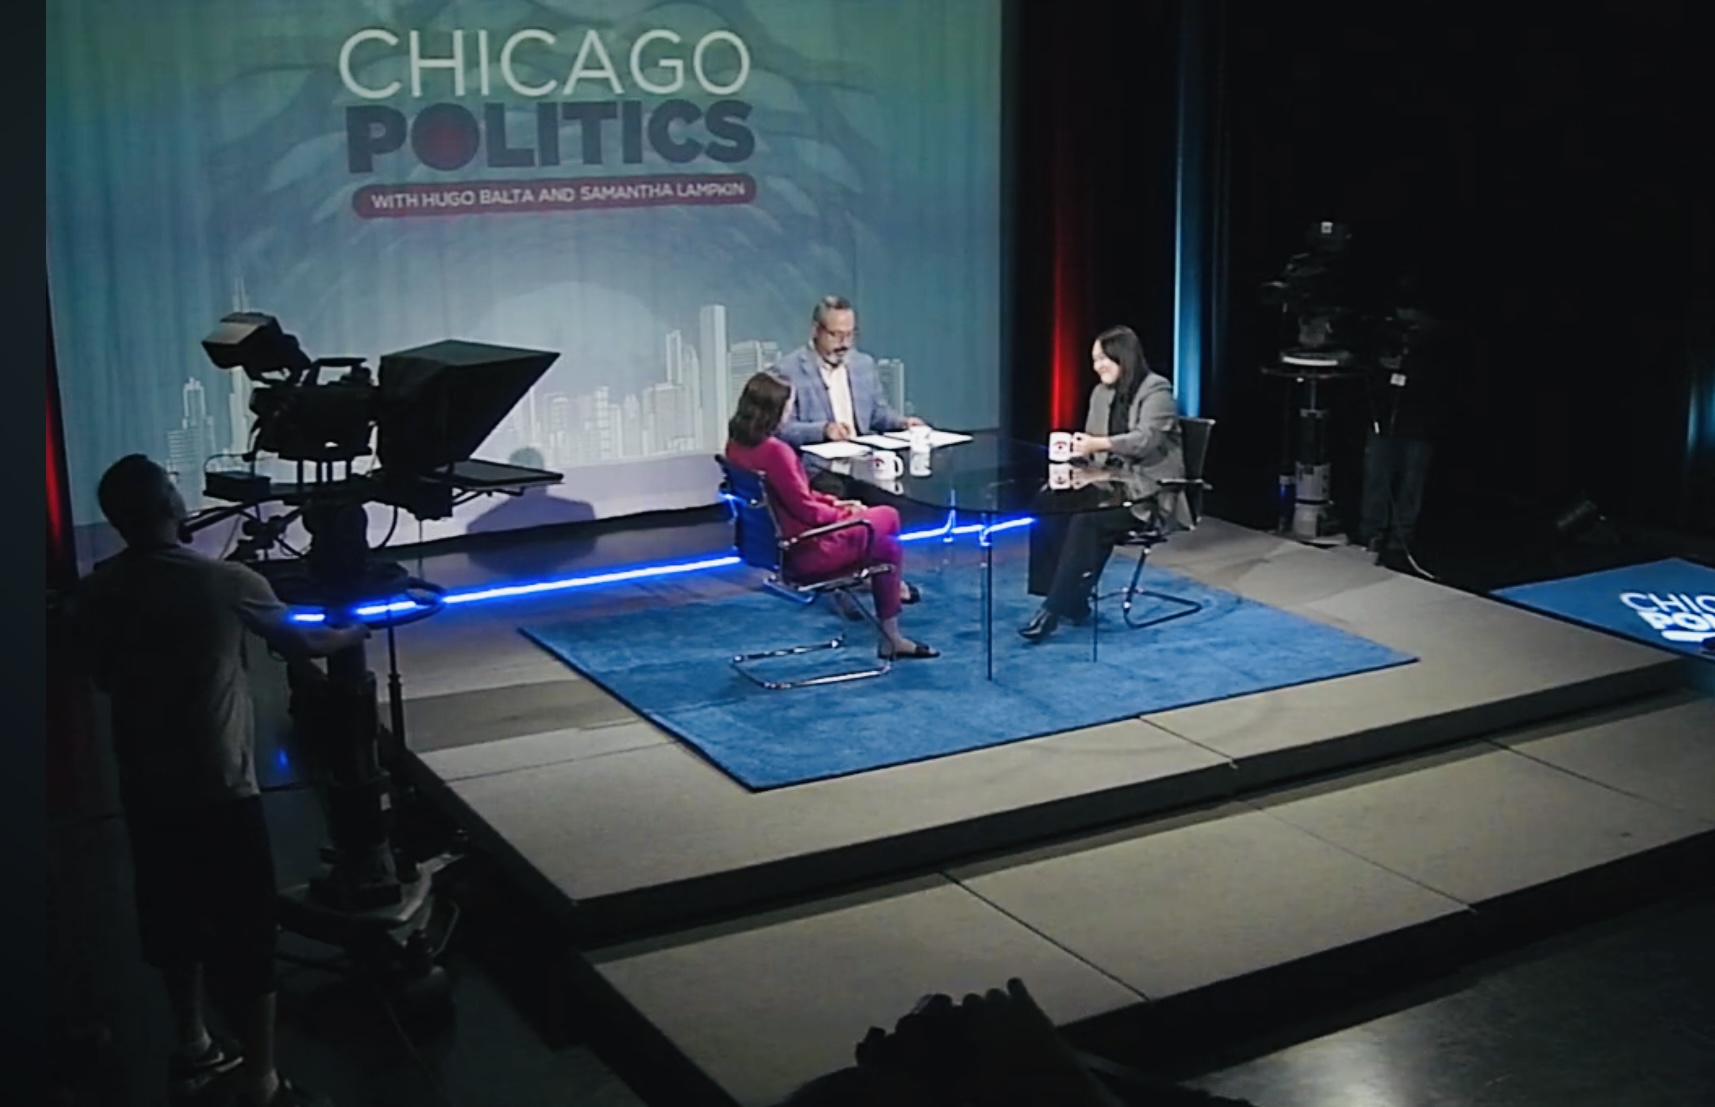 Chicago Politics: The Democratic National Convention